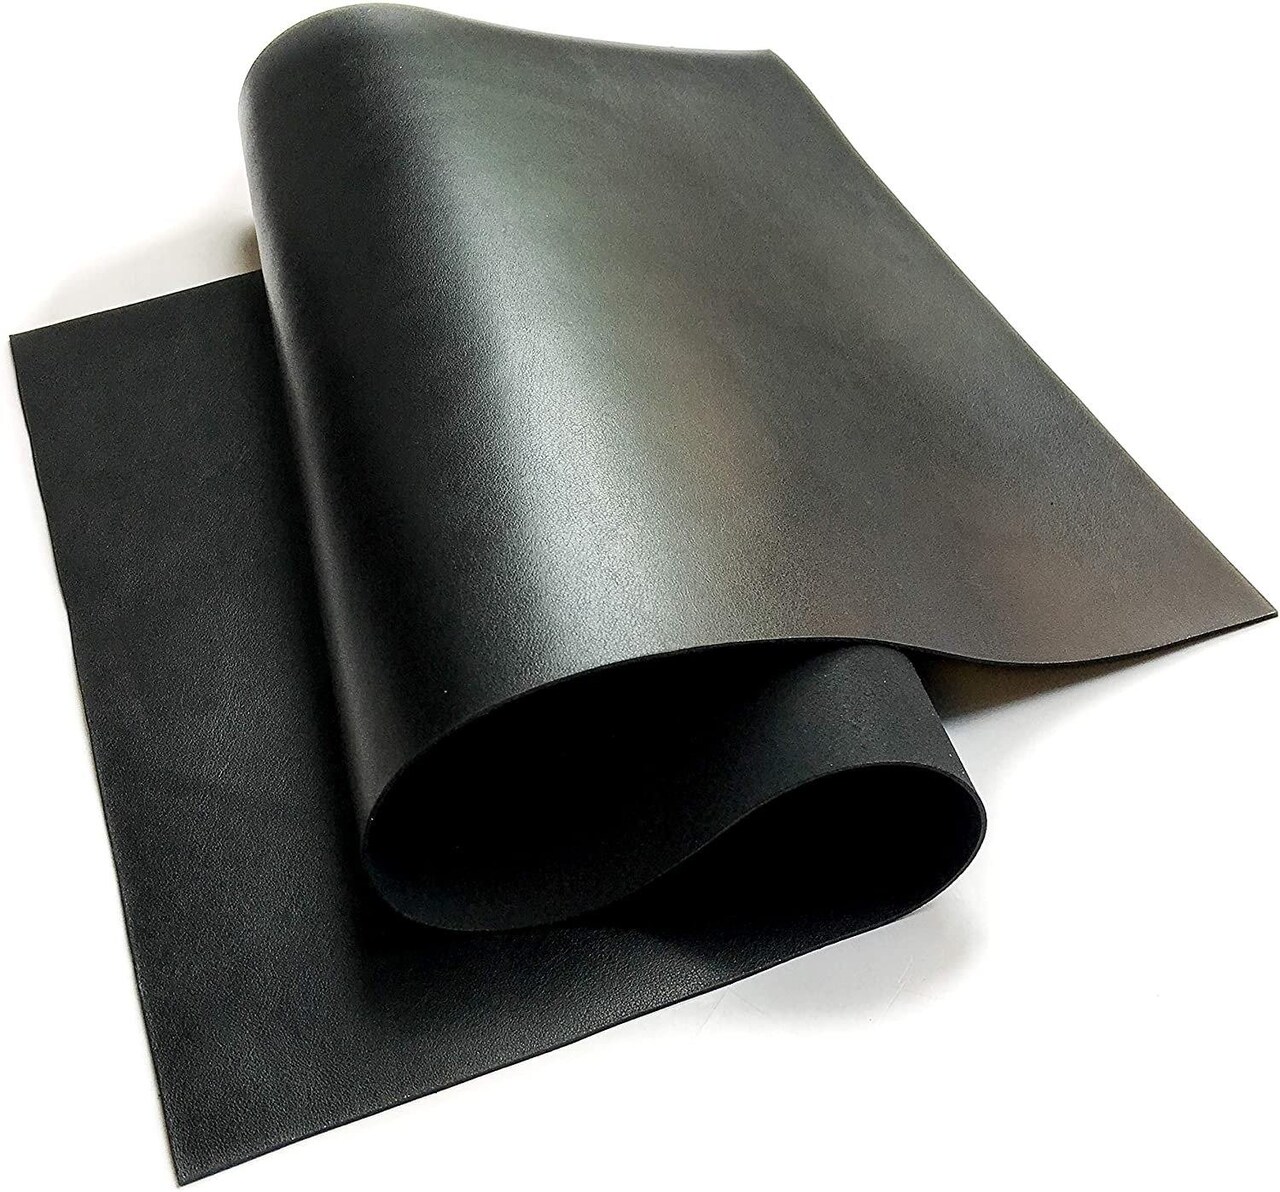 Real Genuine Black Calf Hide Leather: Thick Leather Cow Hide Black Leather Sheets for Crafting and Cricut Maker Supplies (Black, 12x24In/ 30x60cm)